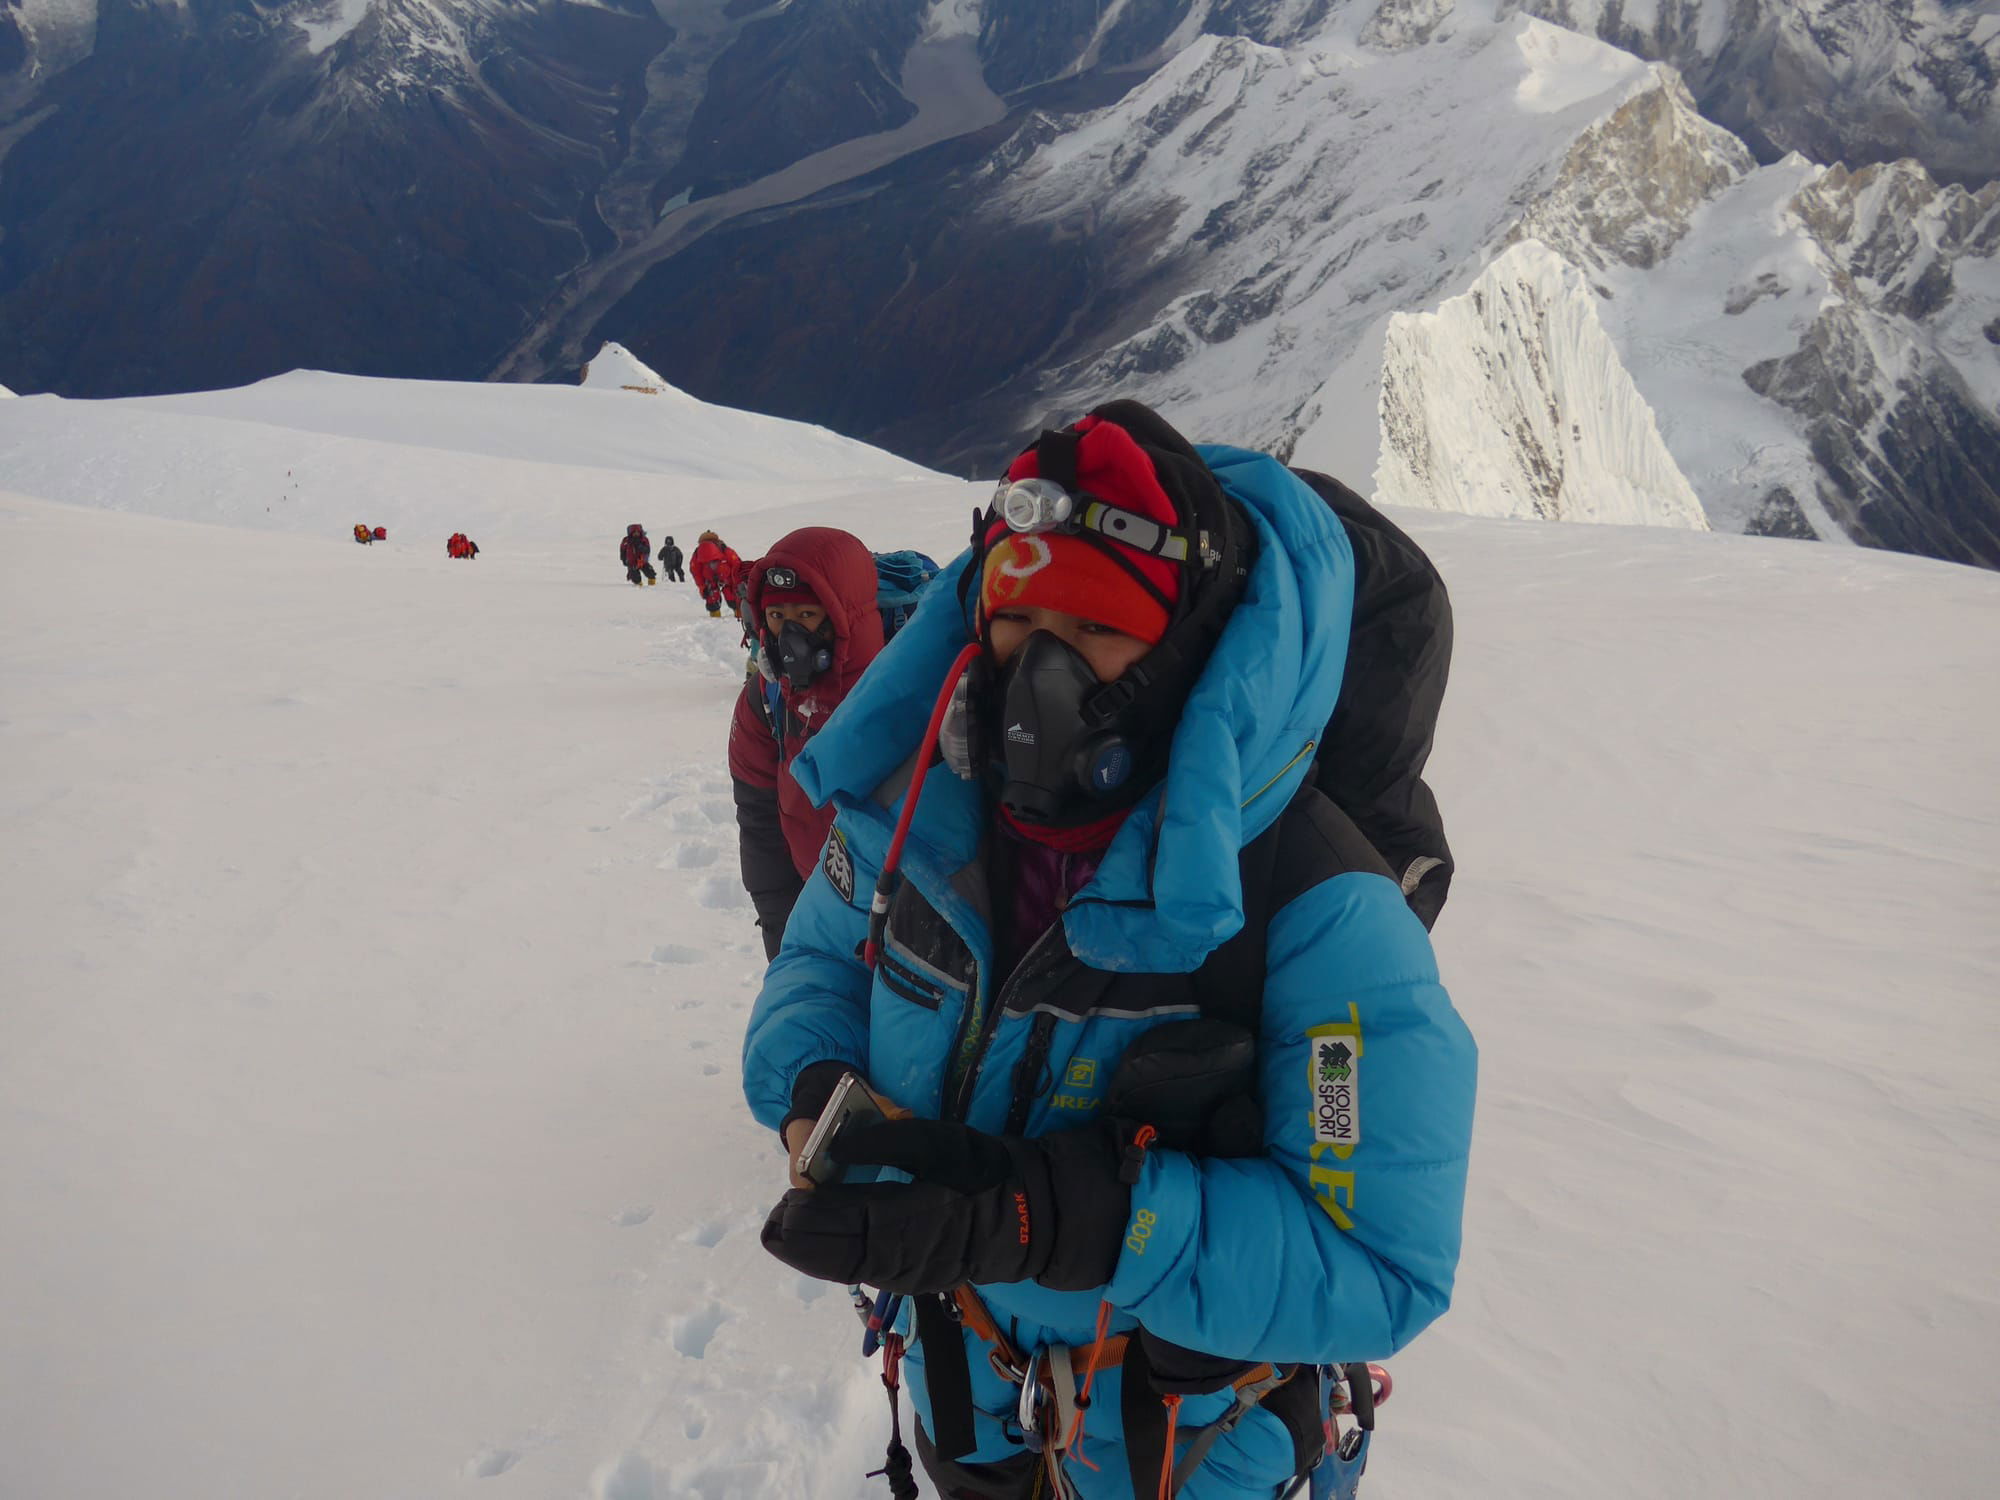 Manaslu 8163 climbing expedition 2019